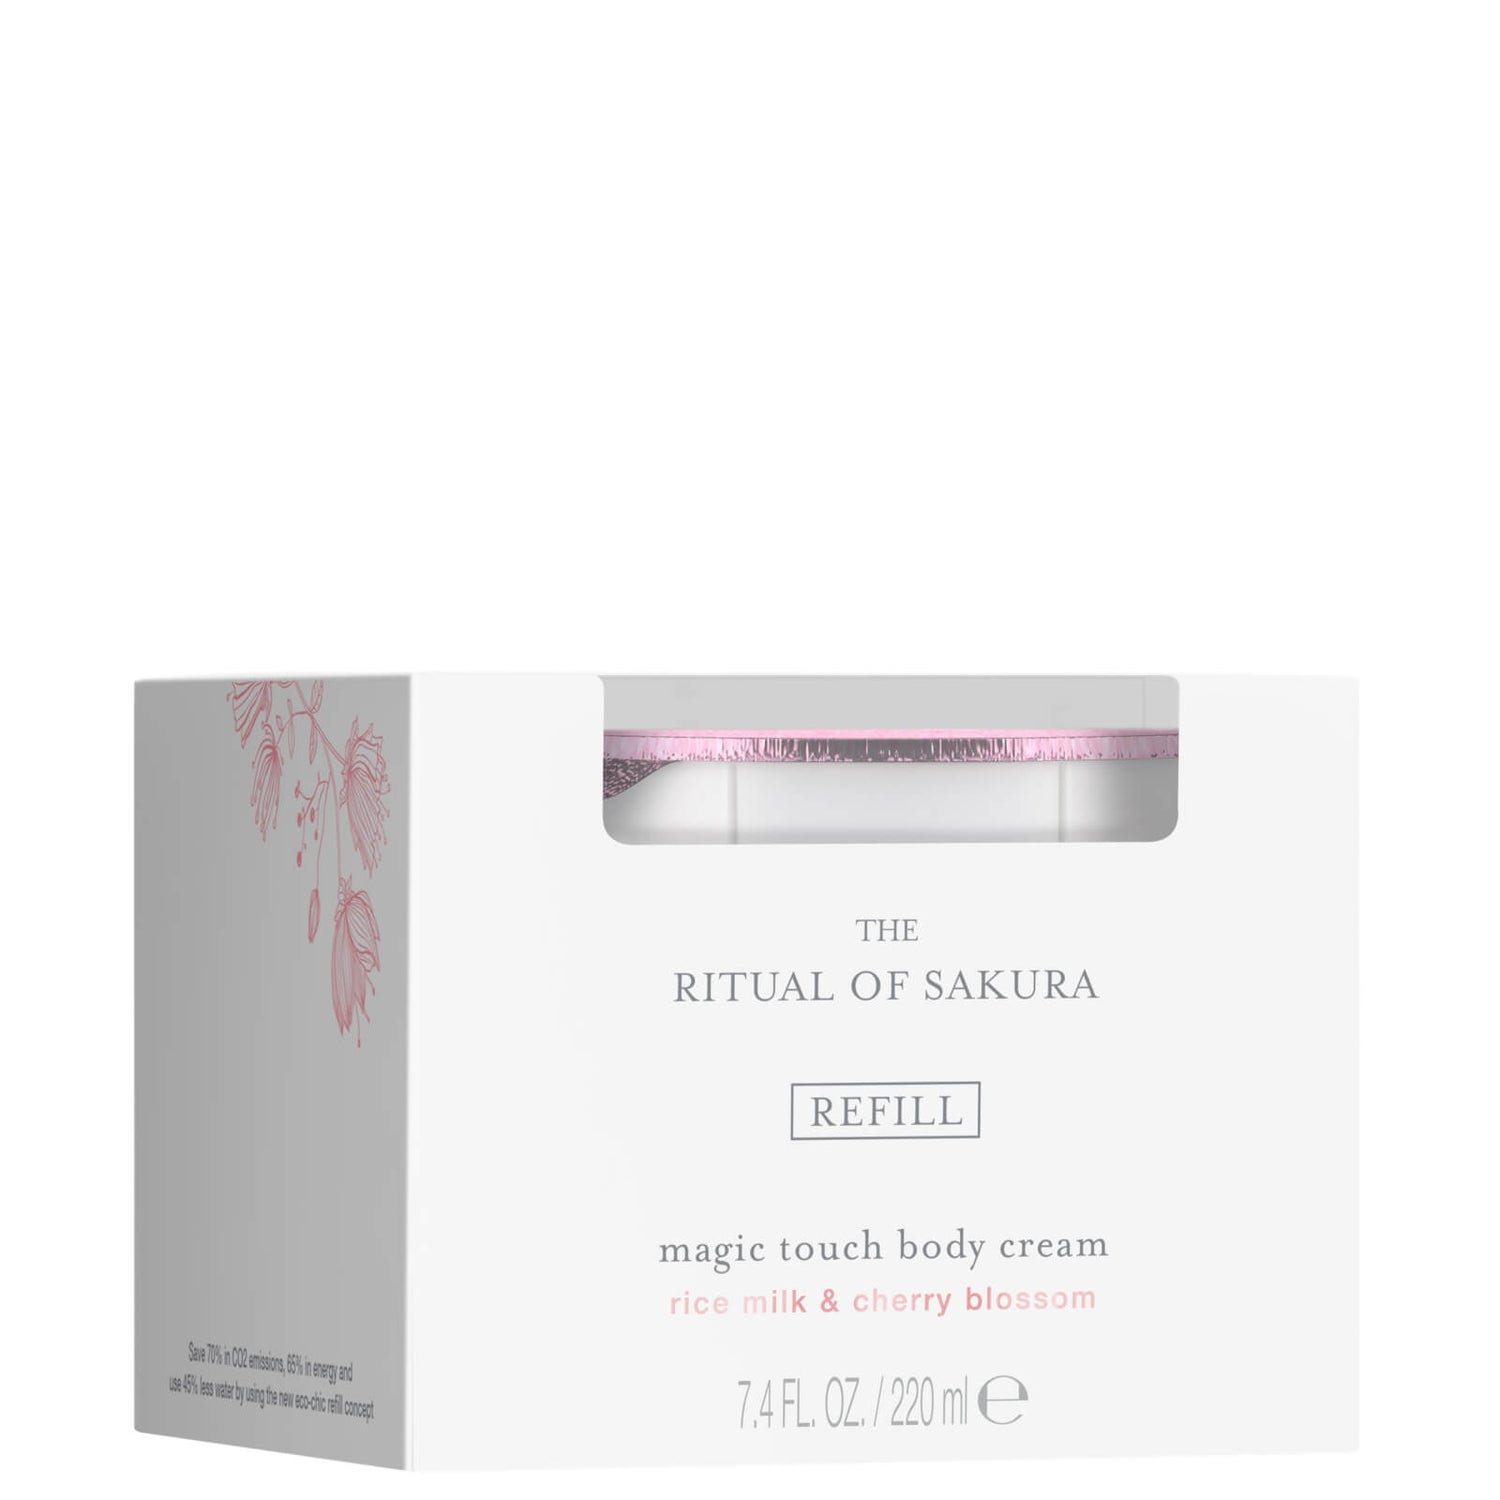 RITUALS The Ritual of Sakura Refill Body Cream, kroppskrem refill 220 ml